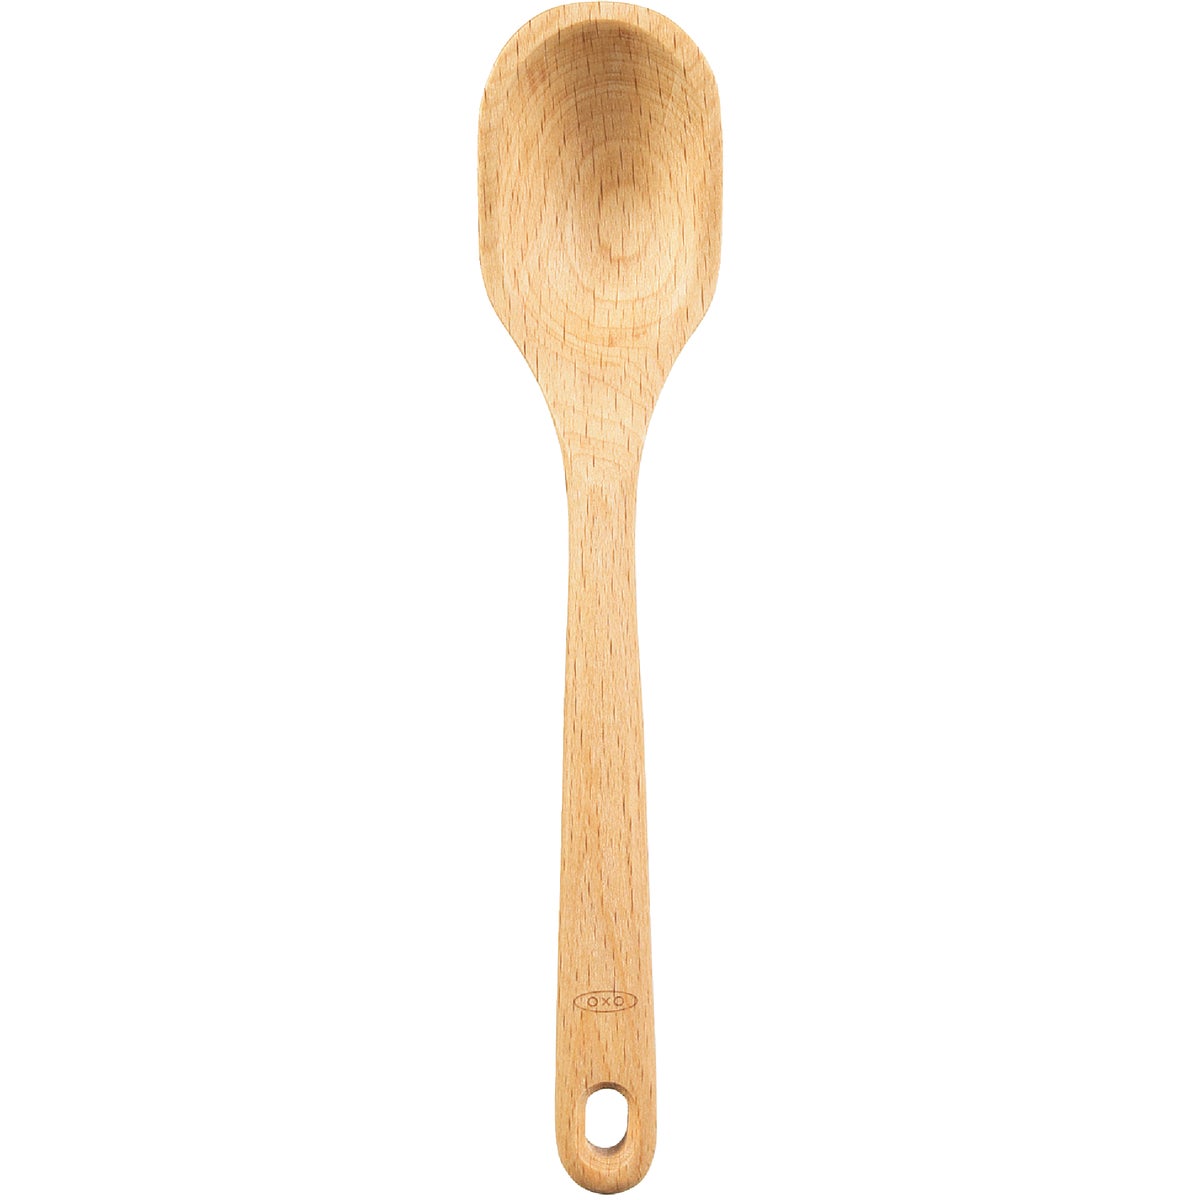 Item 602032, 1-piece beech wood spoon is safe for nonstick cookware.